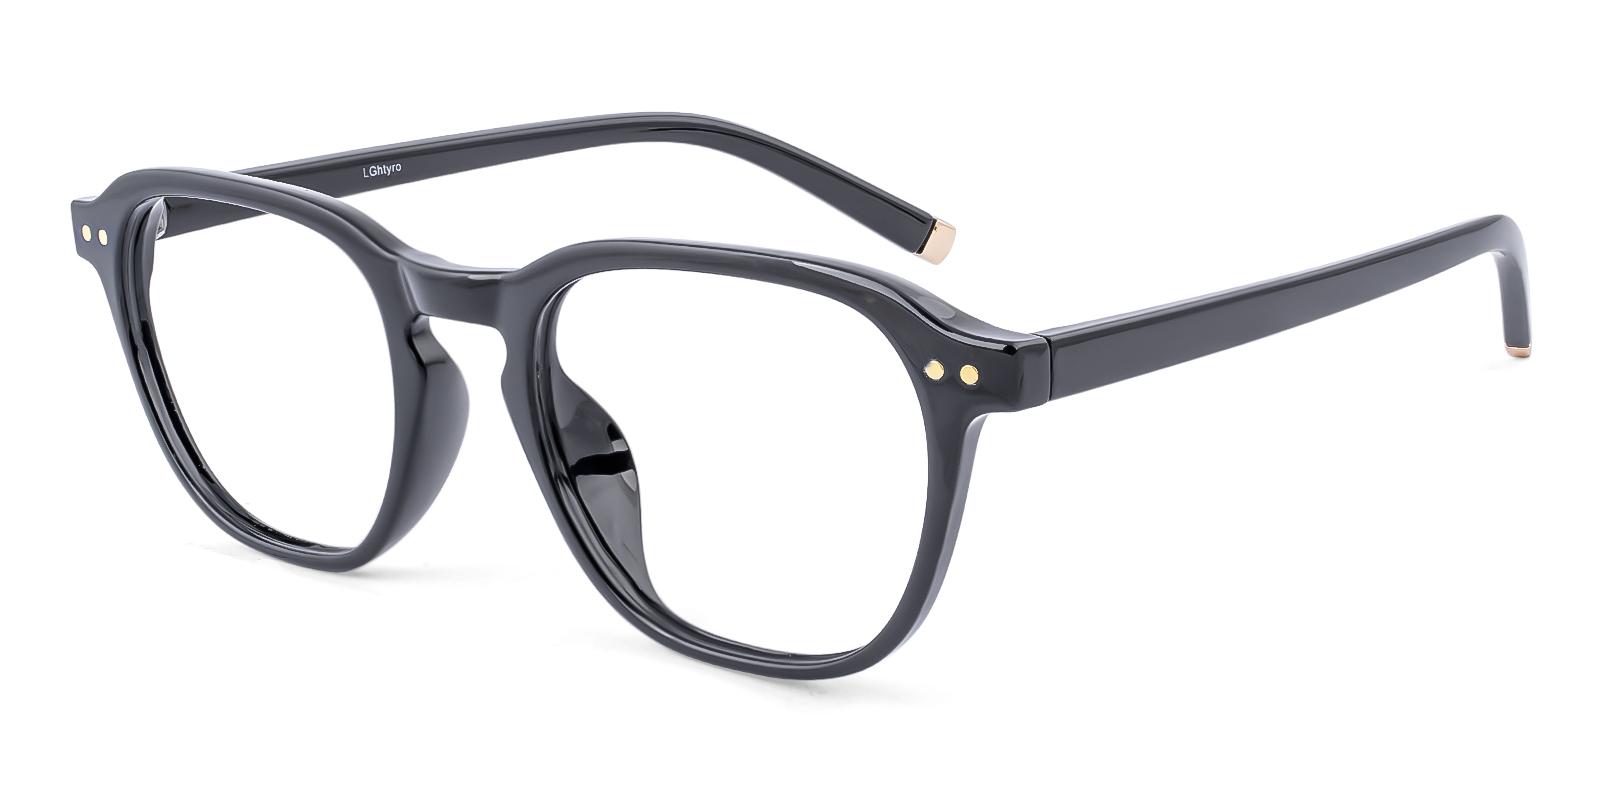 Liquice - Black Square Eyeglasses Frame | ABBE Glasses